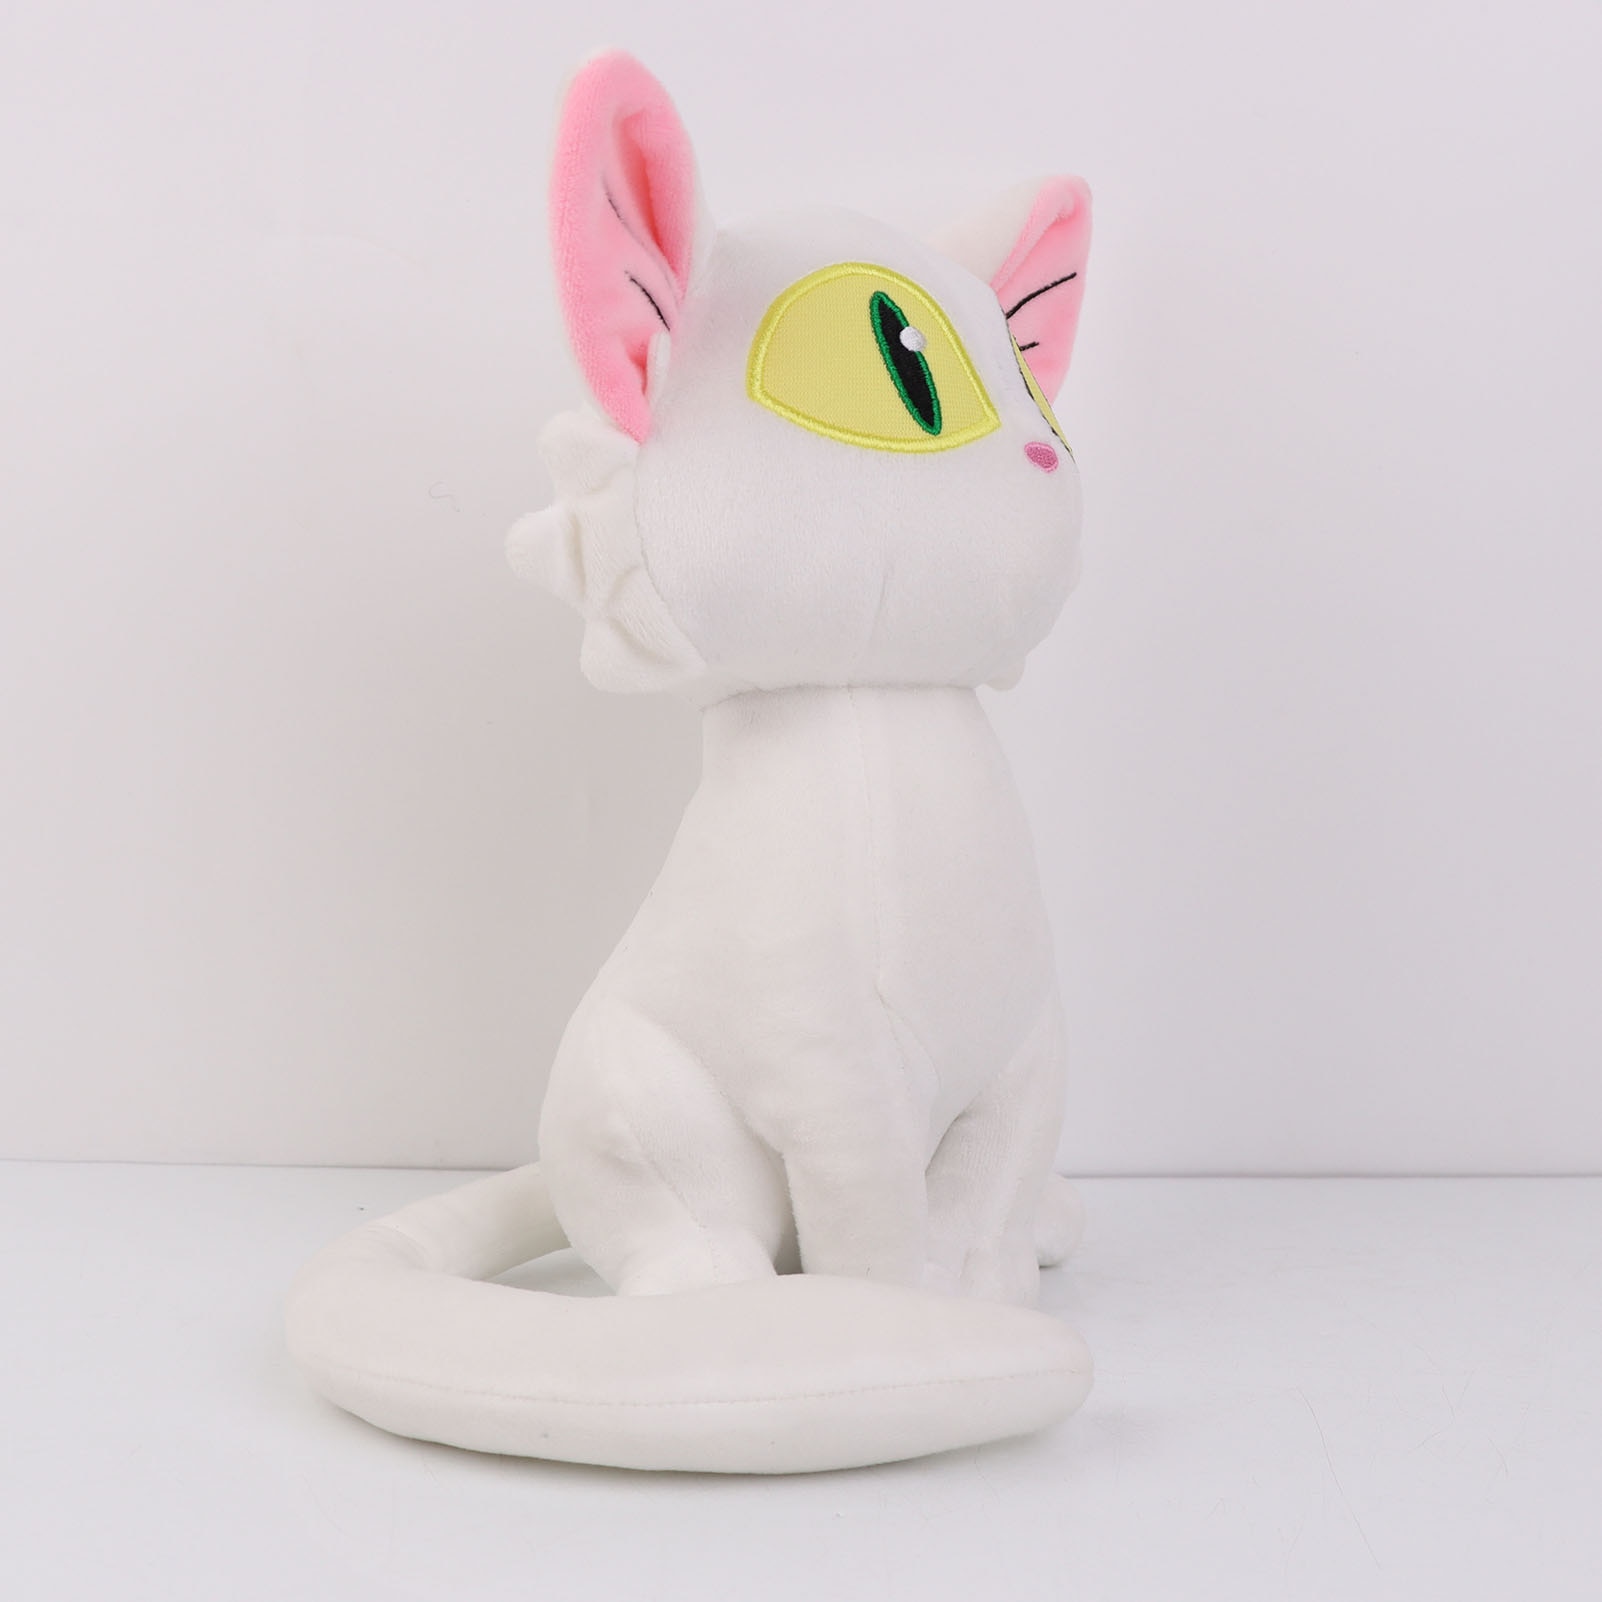 28cm Suzume No Tojimari Plush Toy Daijin Cat and Sadaijin Black Cat Plushie Soft Stuffed Animal 2